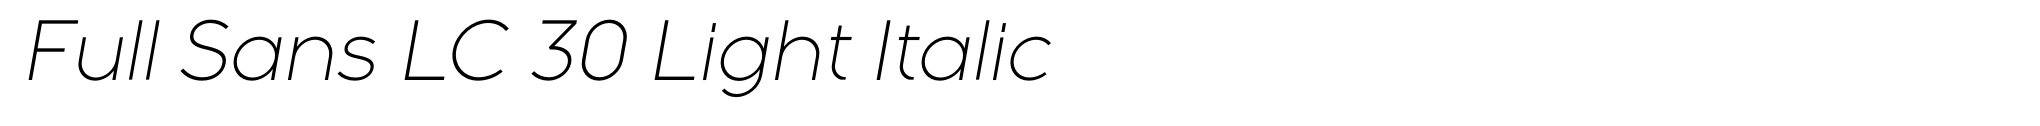 Full Sans LC 30 Light Italic image